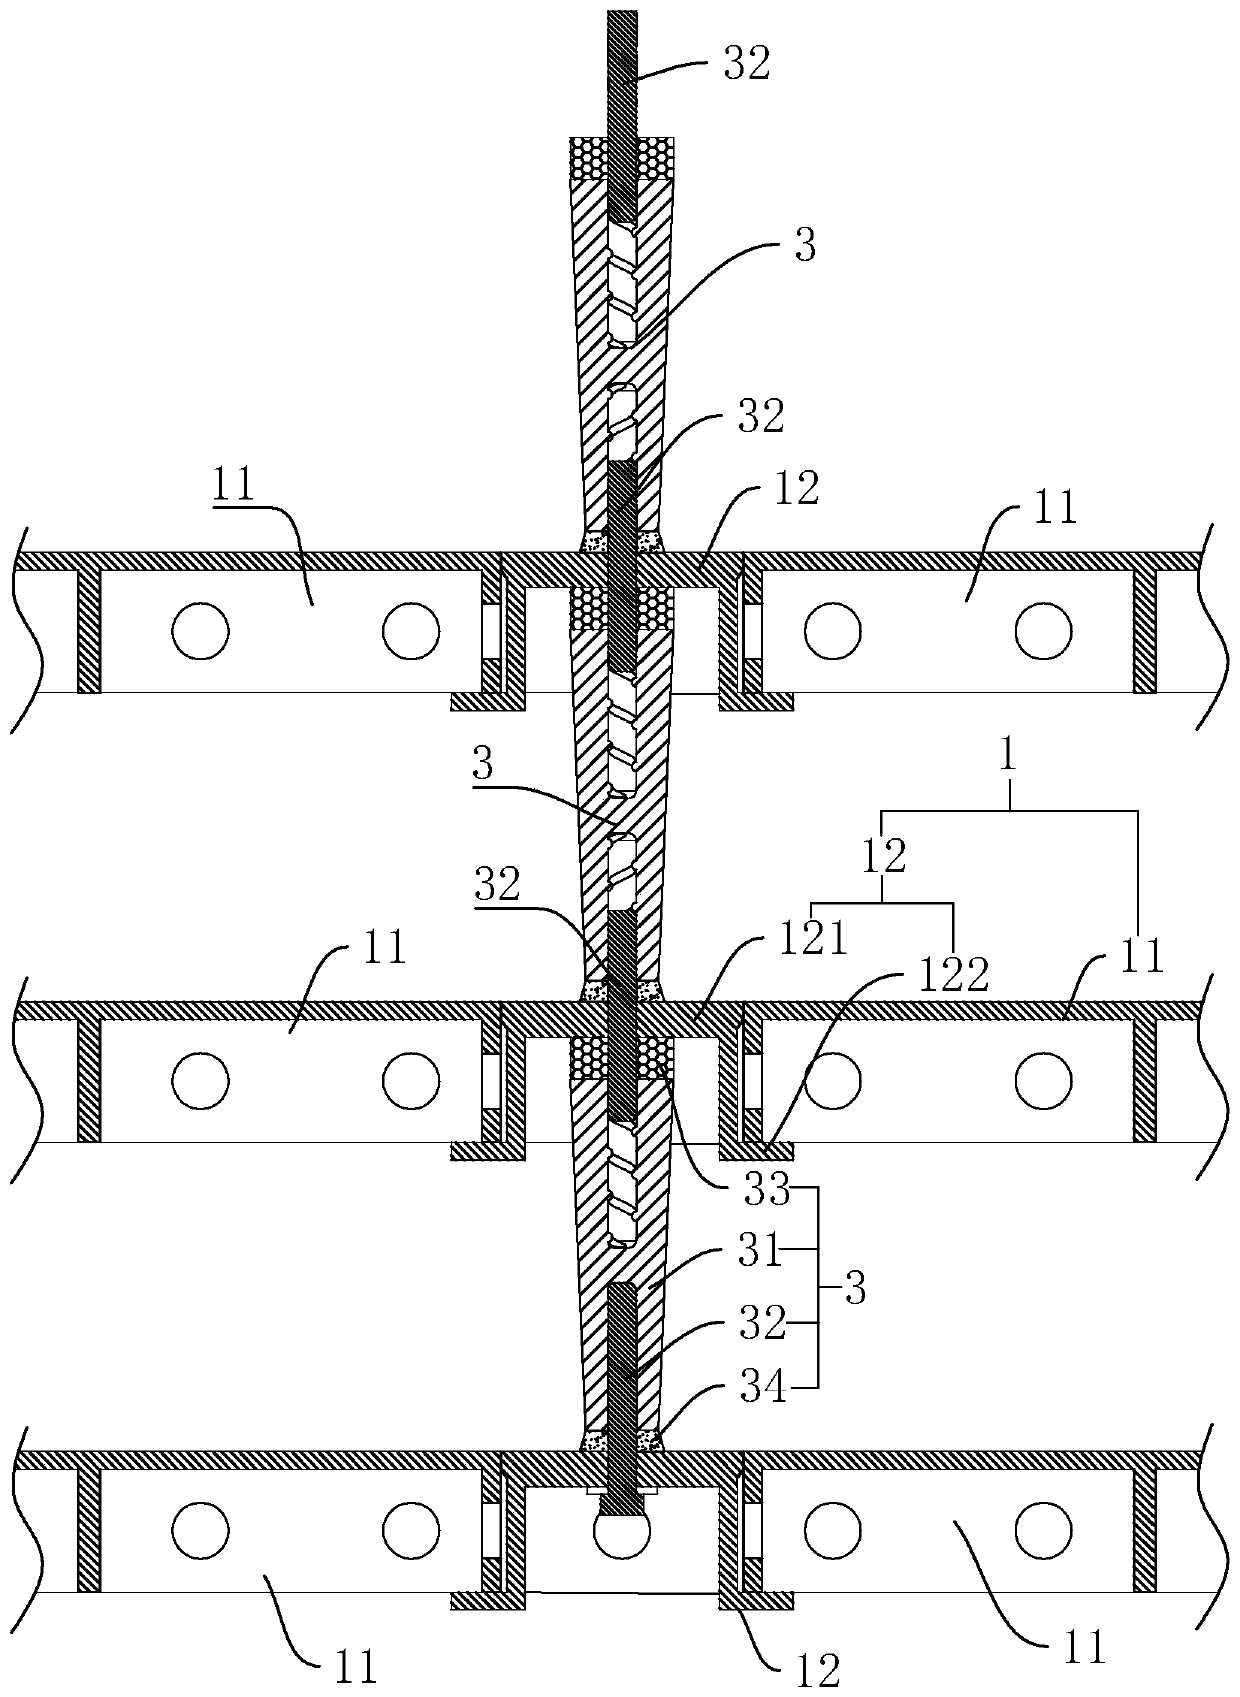 Three-dimensional movable precast concrete component production system